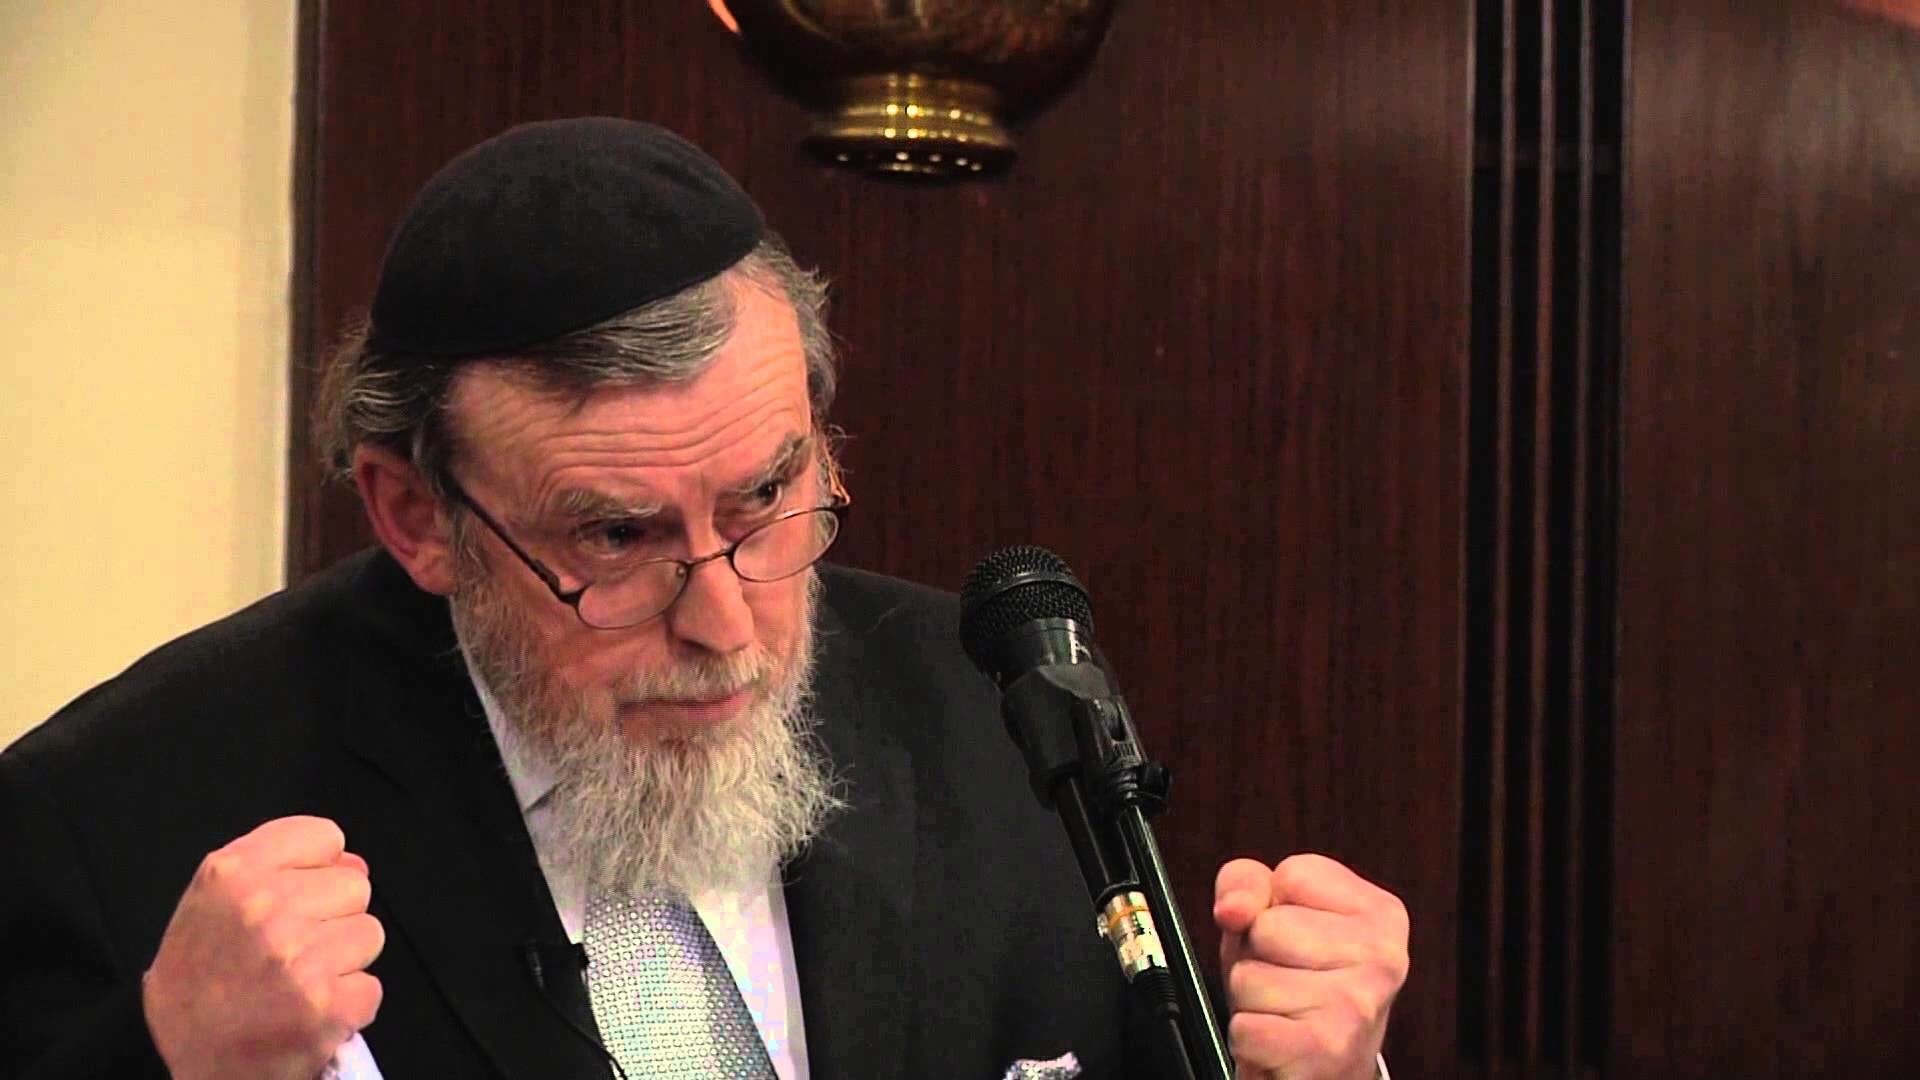 Rabbi Nathan Lopes Cardozo